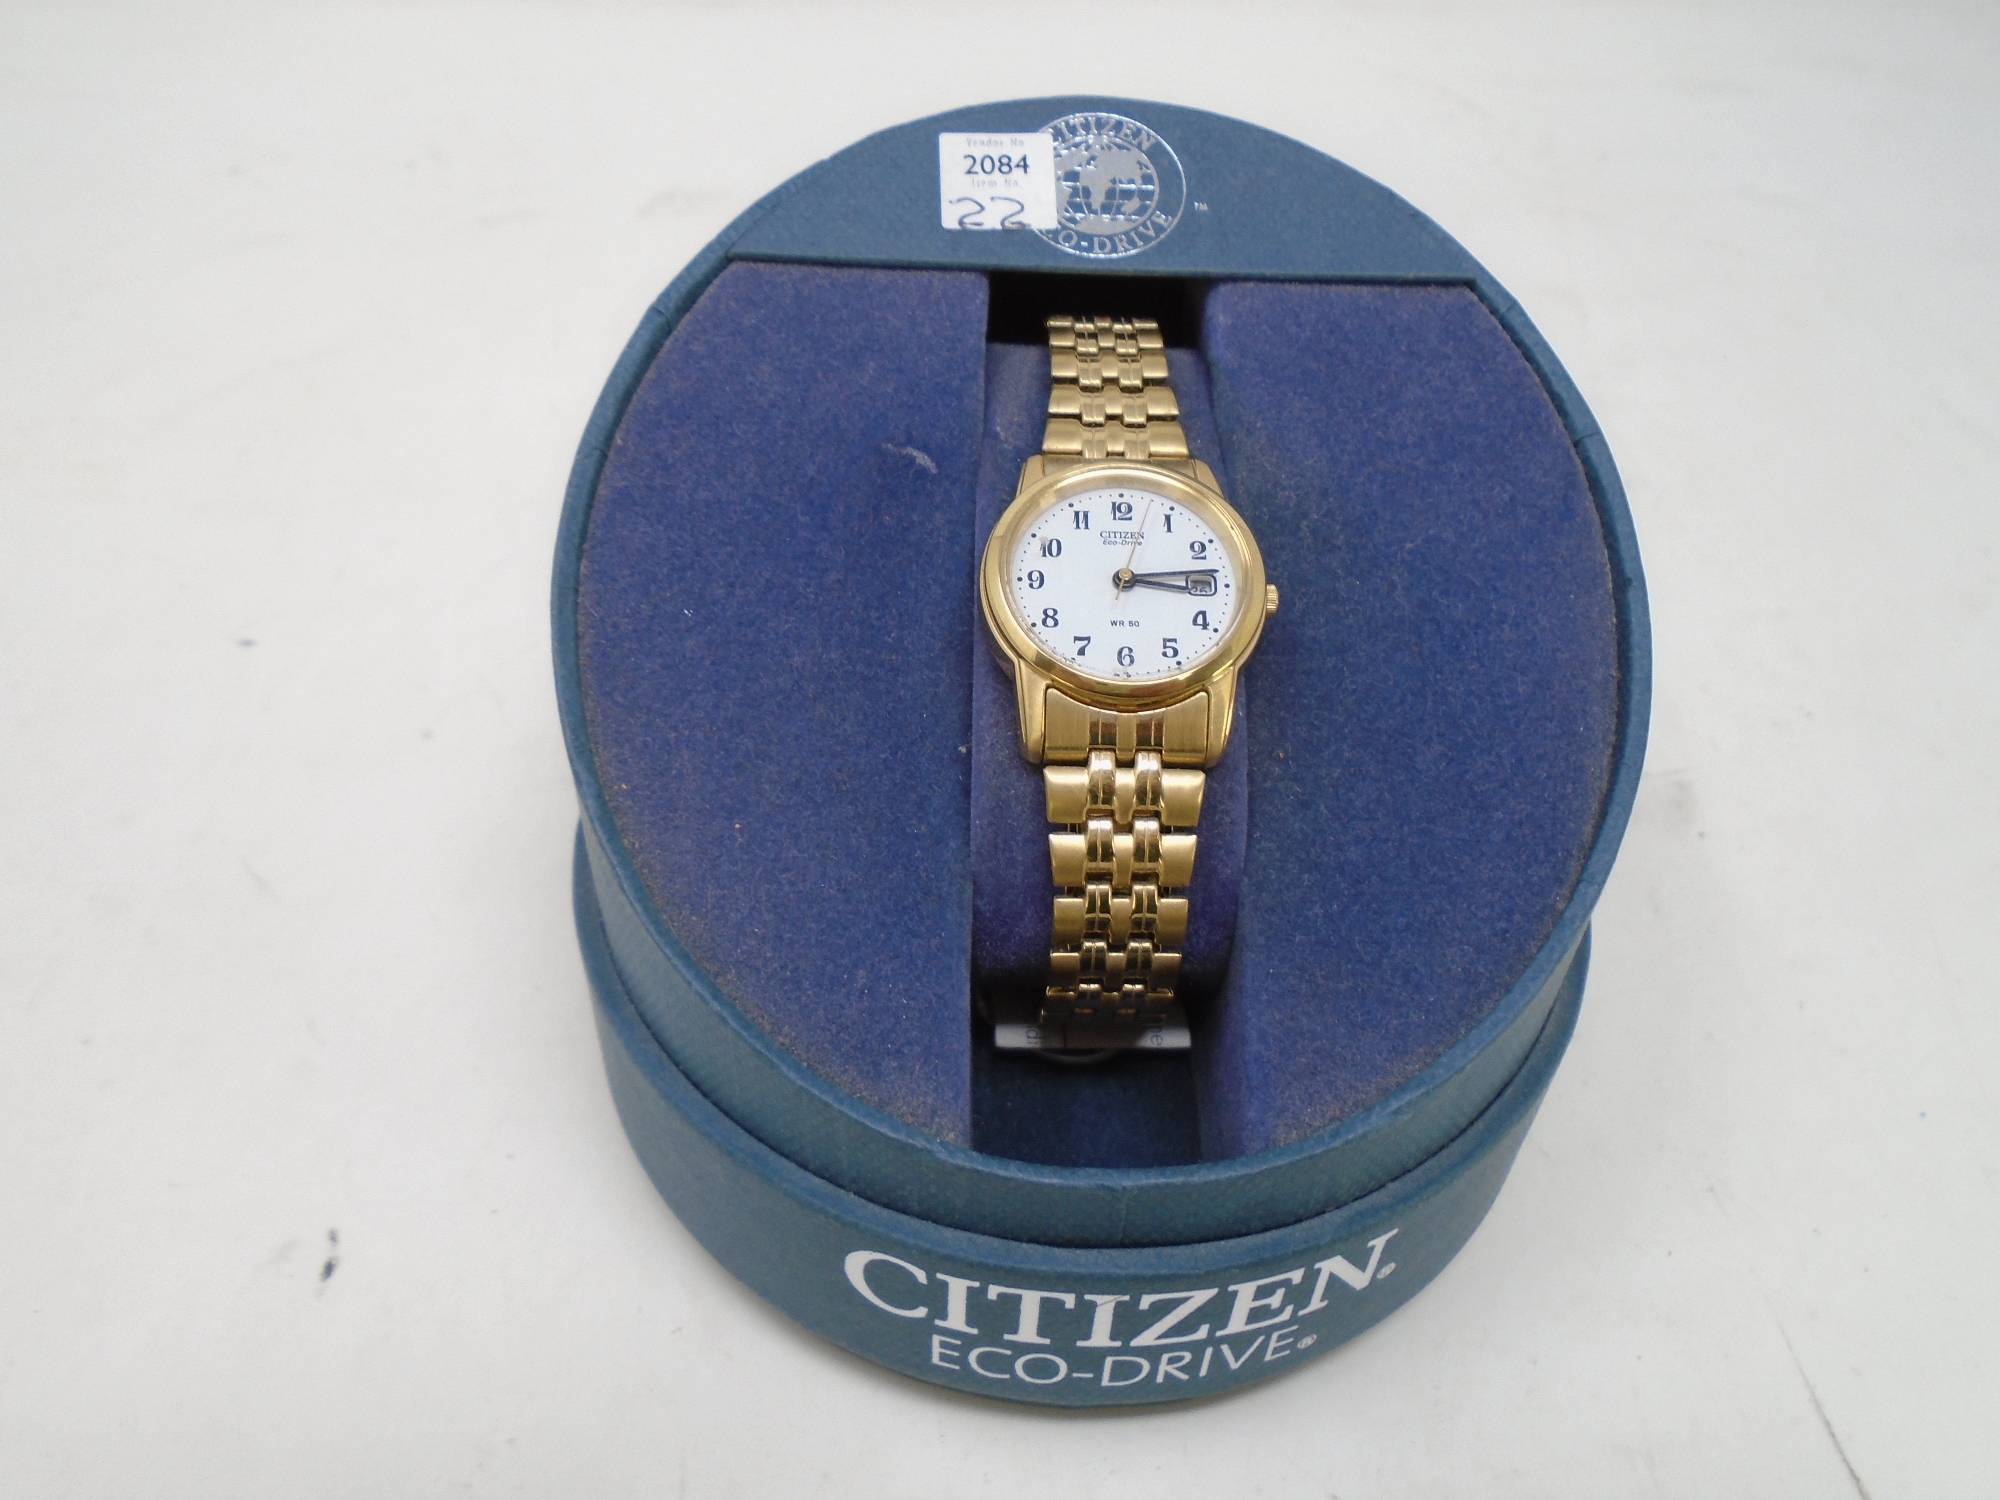 A Lady's Citizen Eco-drive wristwatch.